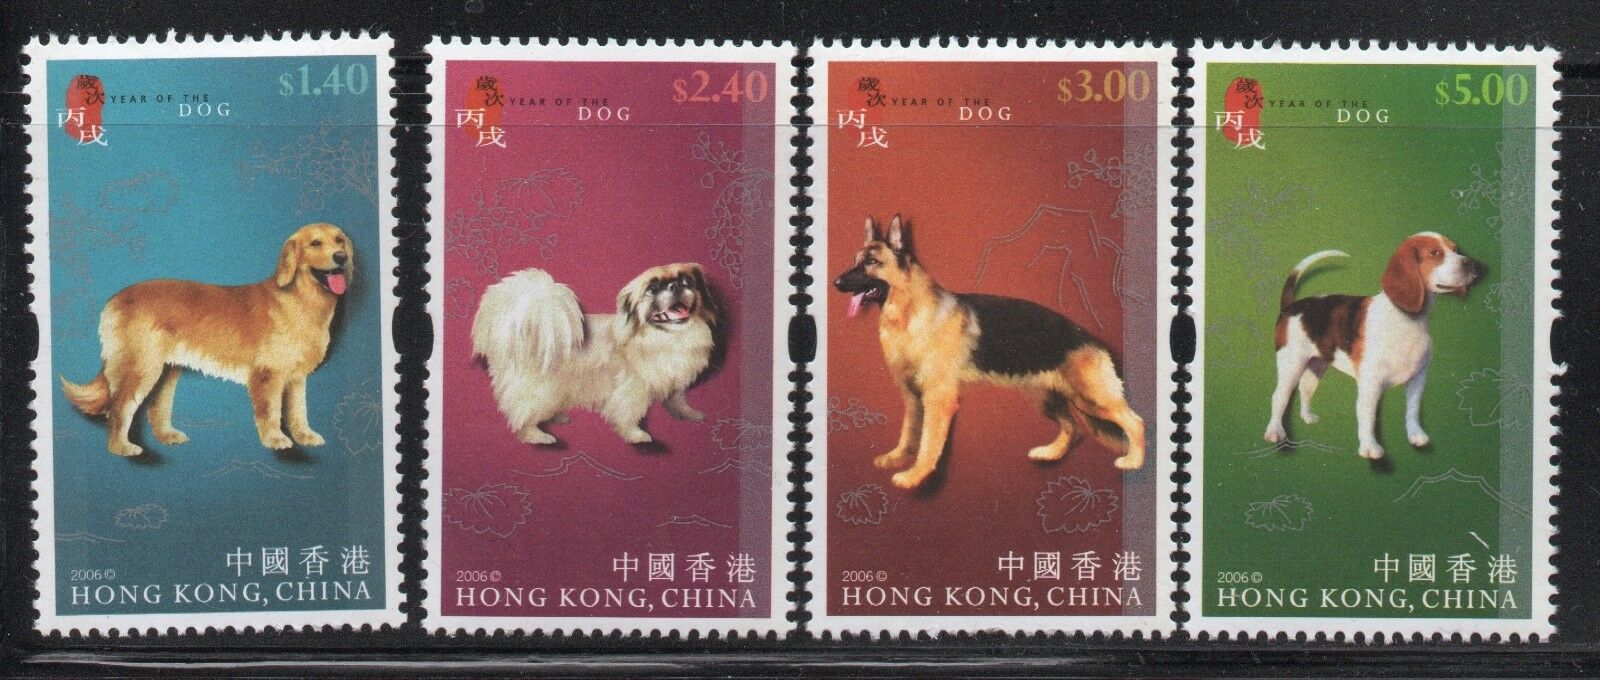 Hong Kong Sc#1169-72 Dogs 2006, Mnh Vf